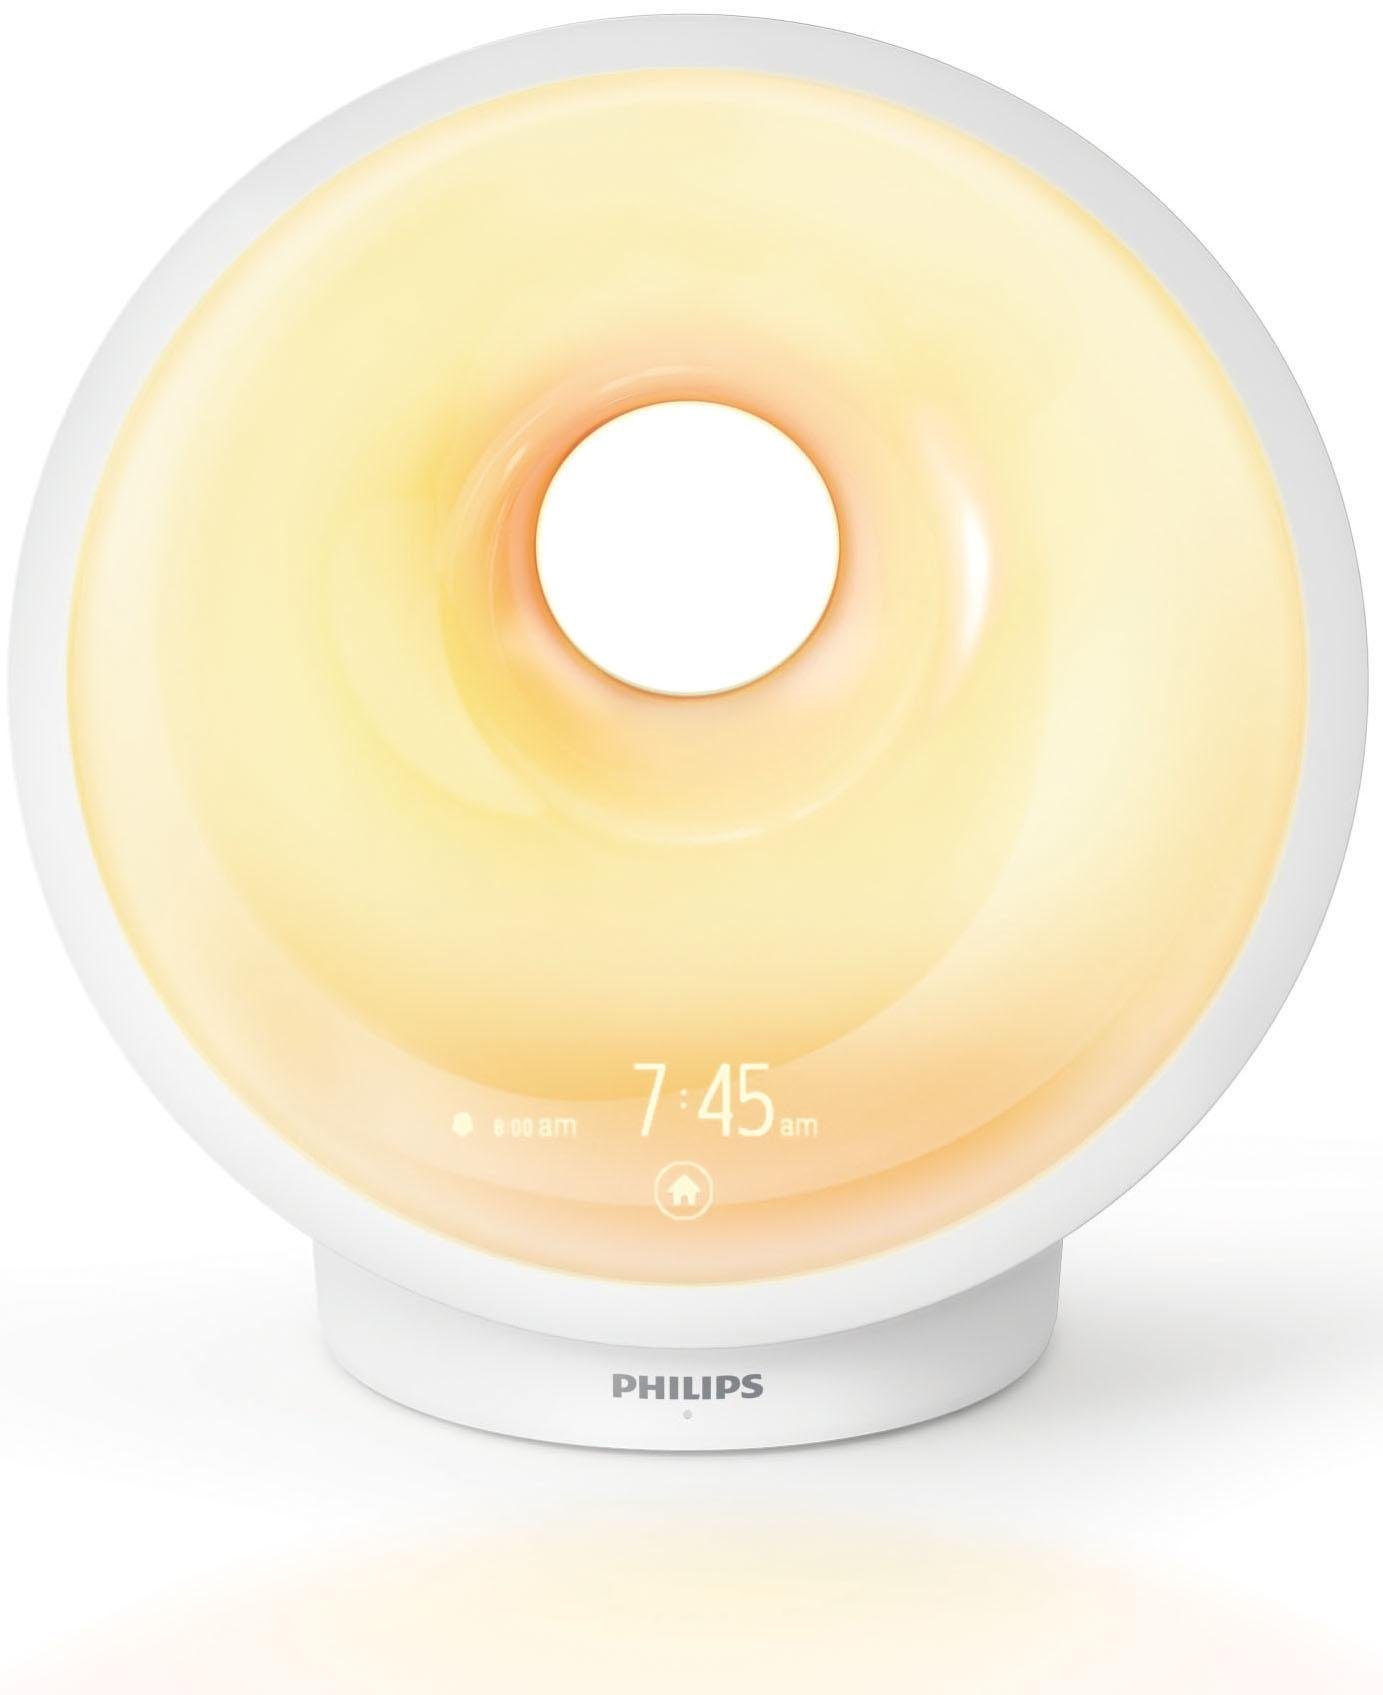 Philips Daglichtwekker Wake Up Light met gesimuleerde zonsopkomst vind je bij | OTTO